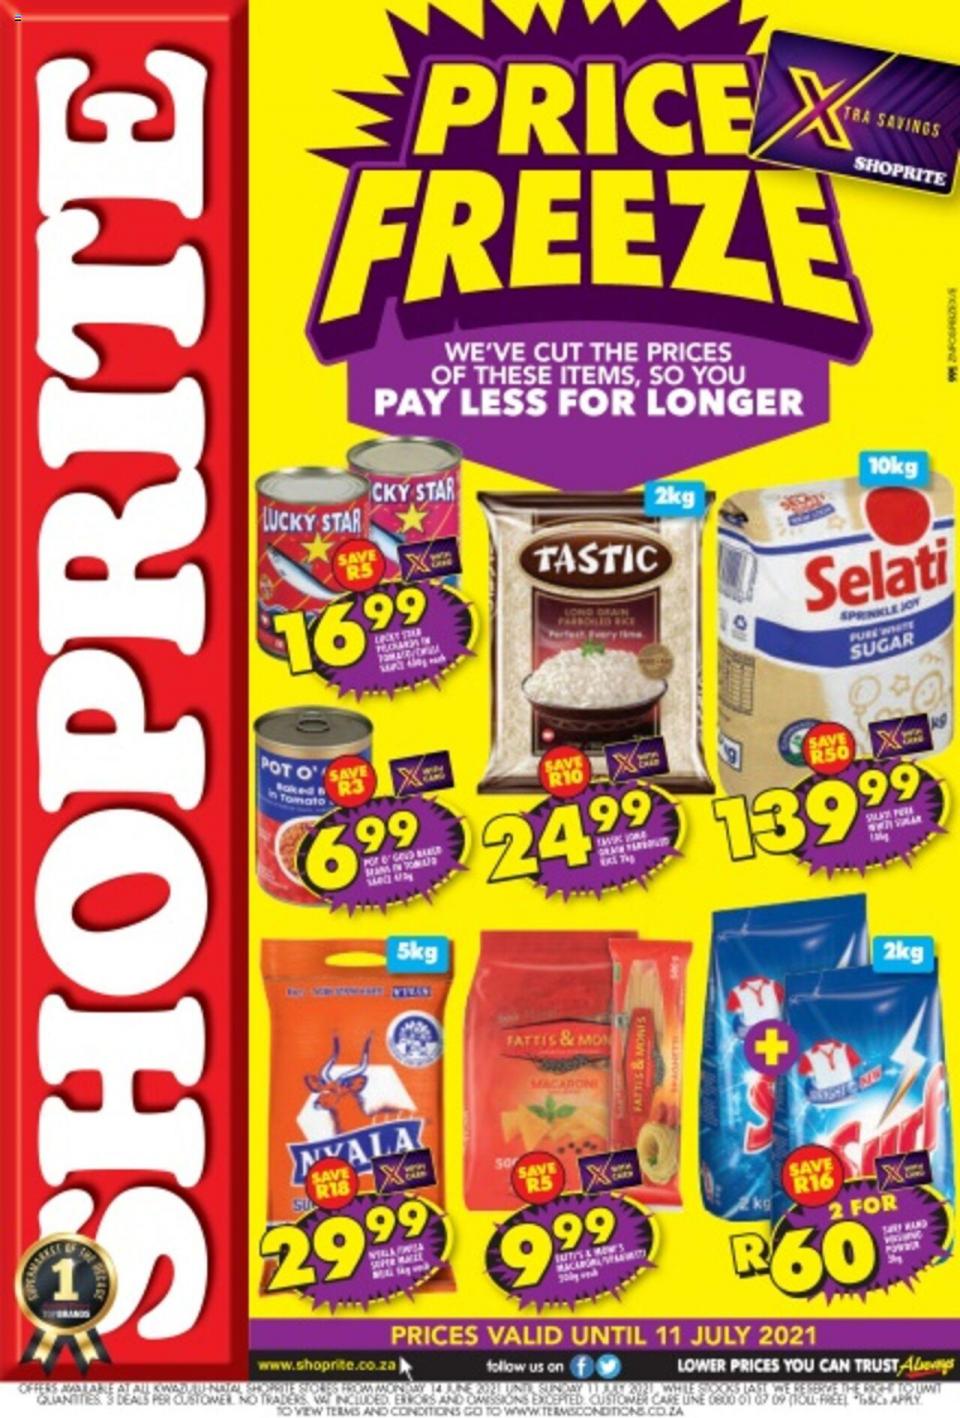 Shoprite Specials Price Freeze 14 – 20 June 2021